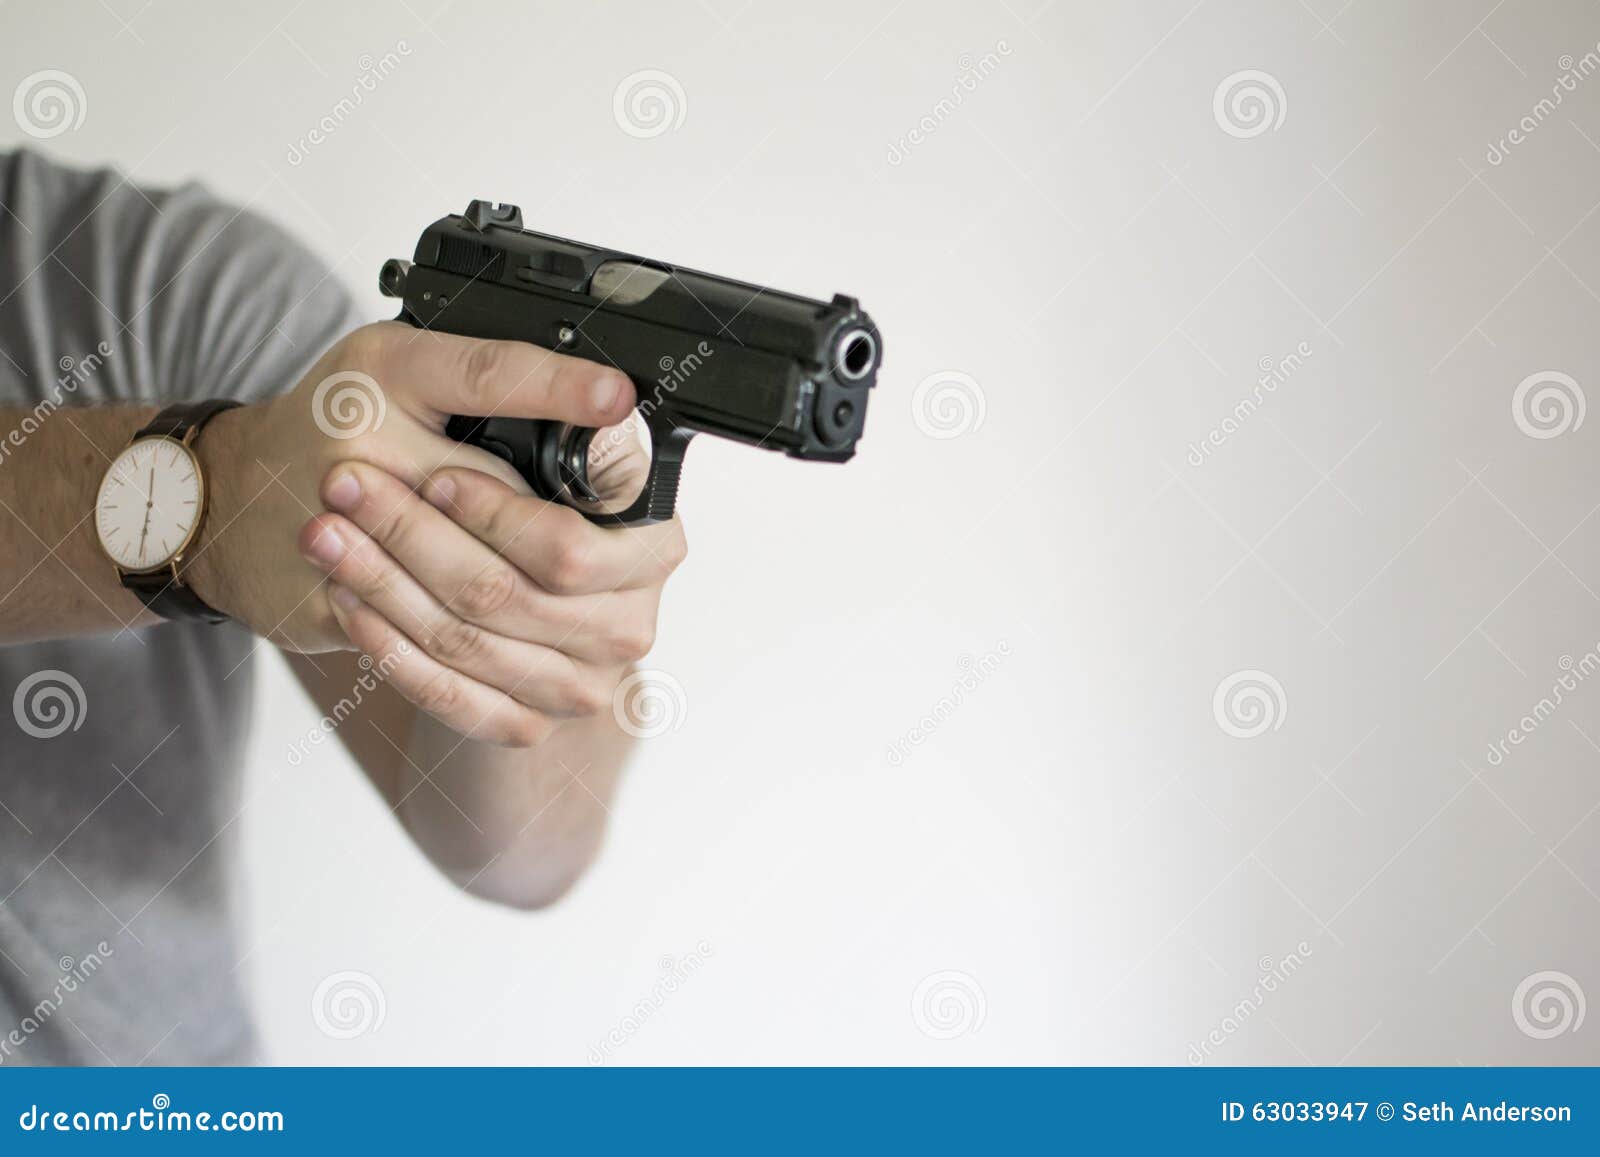 man aiming handgun from holster in self defense